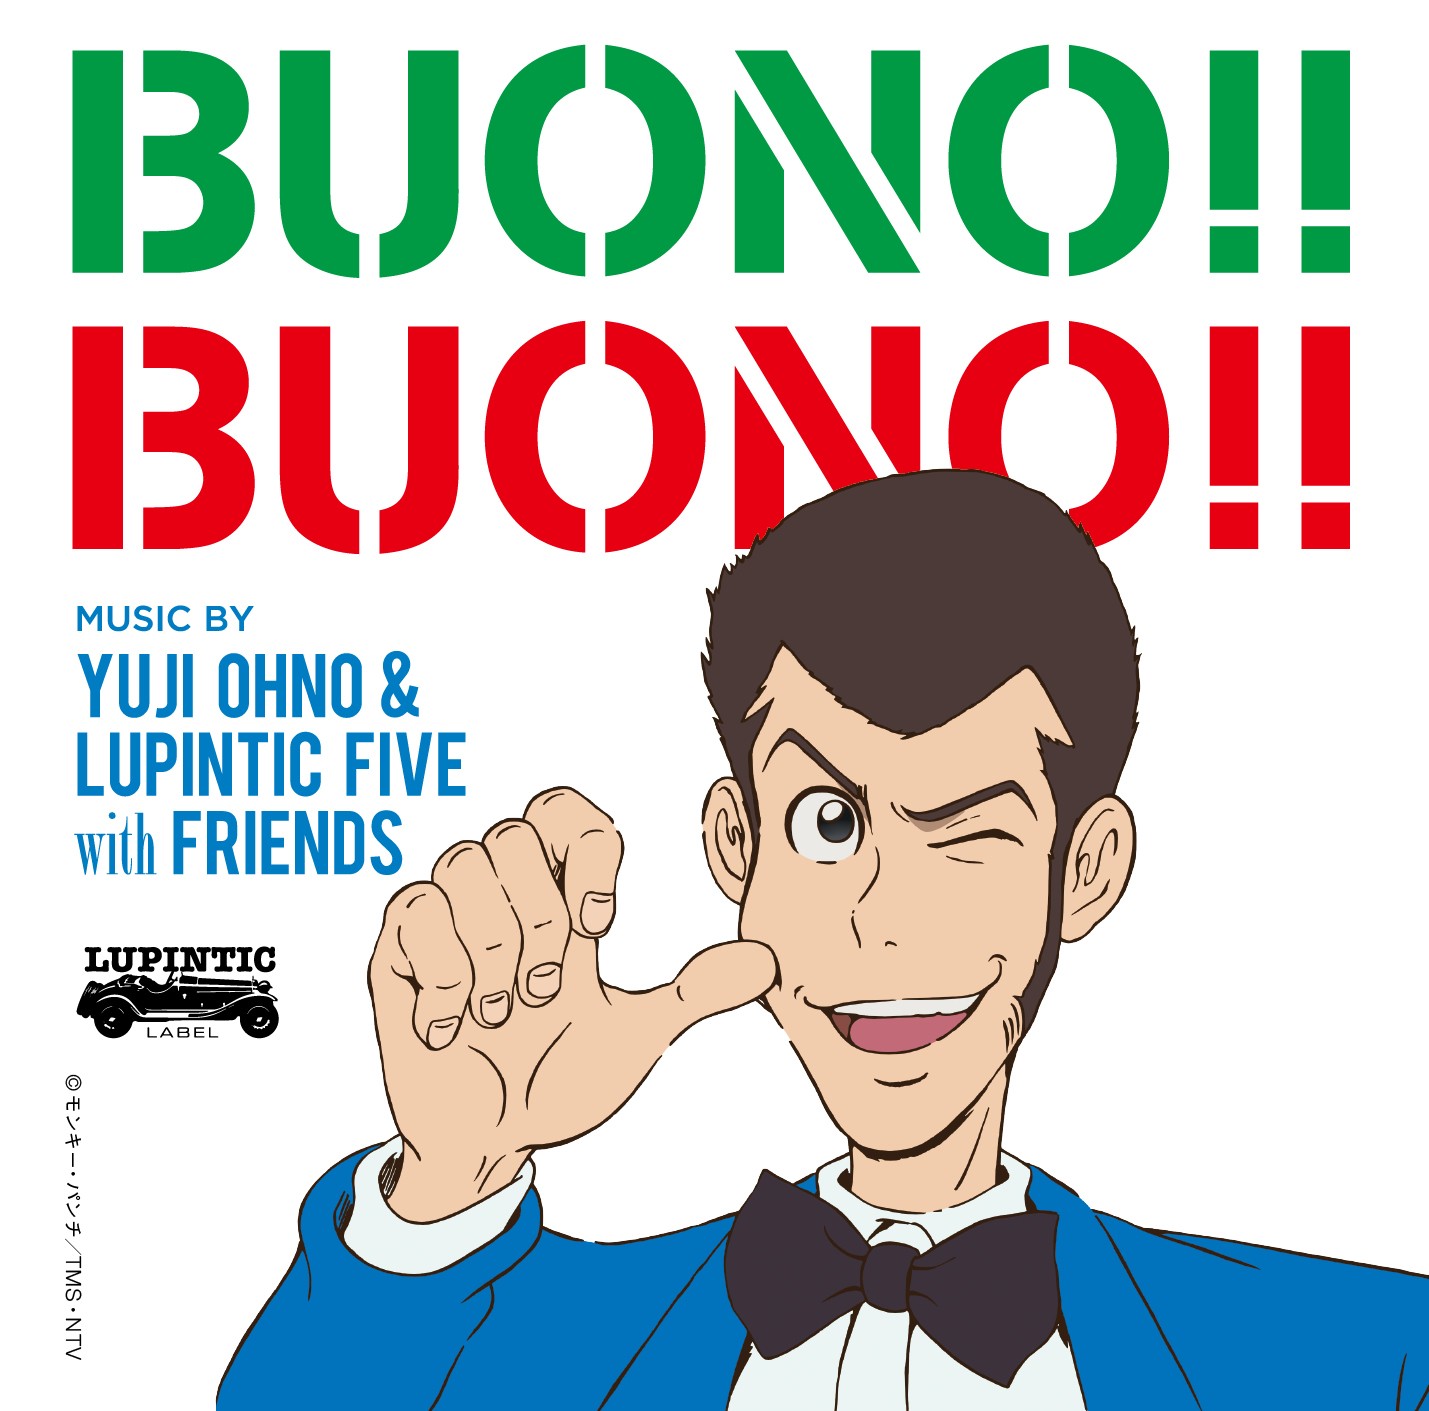 Yuji Ohno & Lupintic Five with Friends – BUONO!! BUONO!! [Mora FLAC 24bit/48kHz]